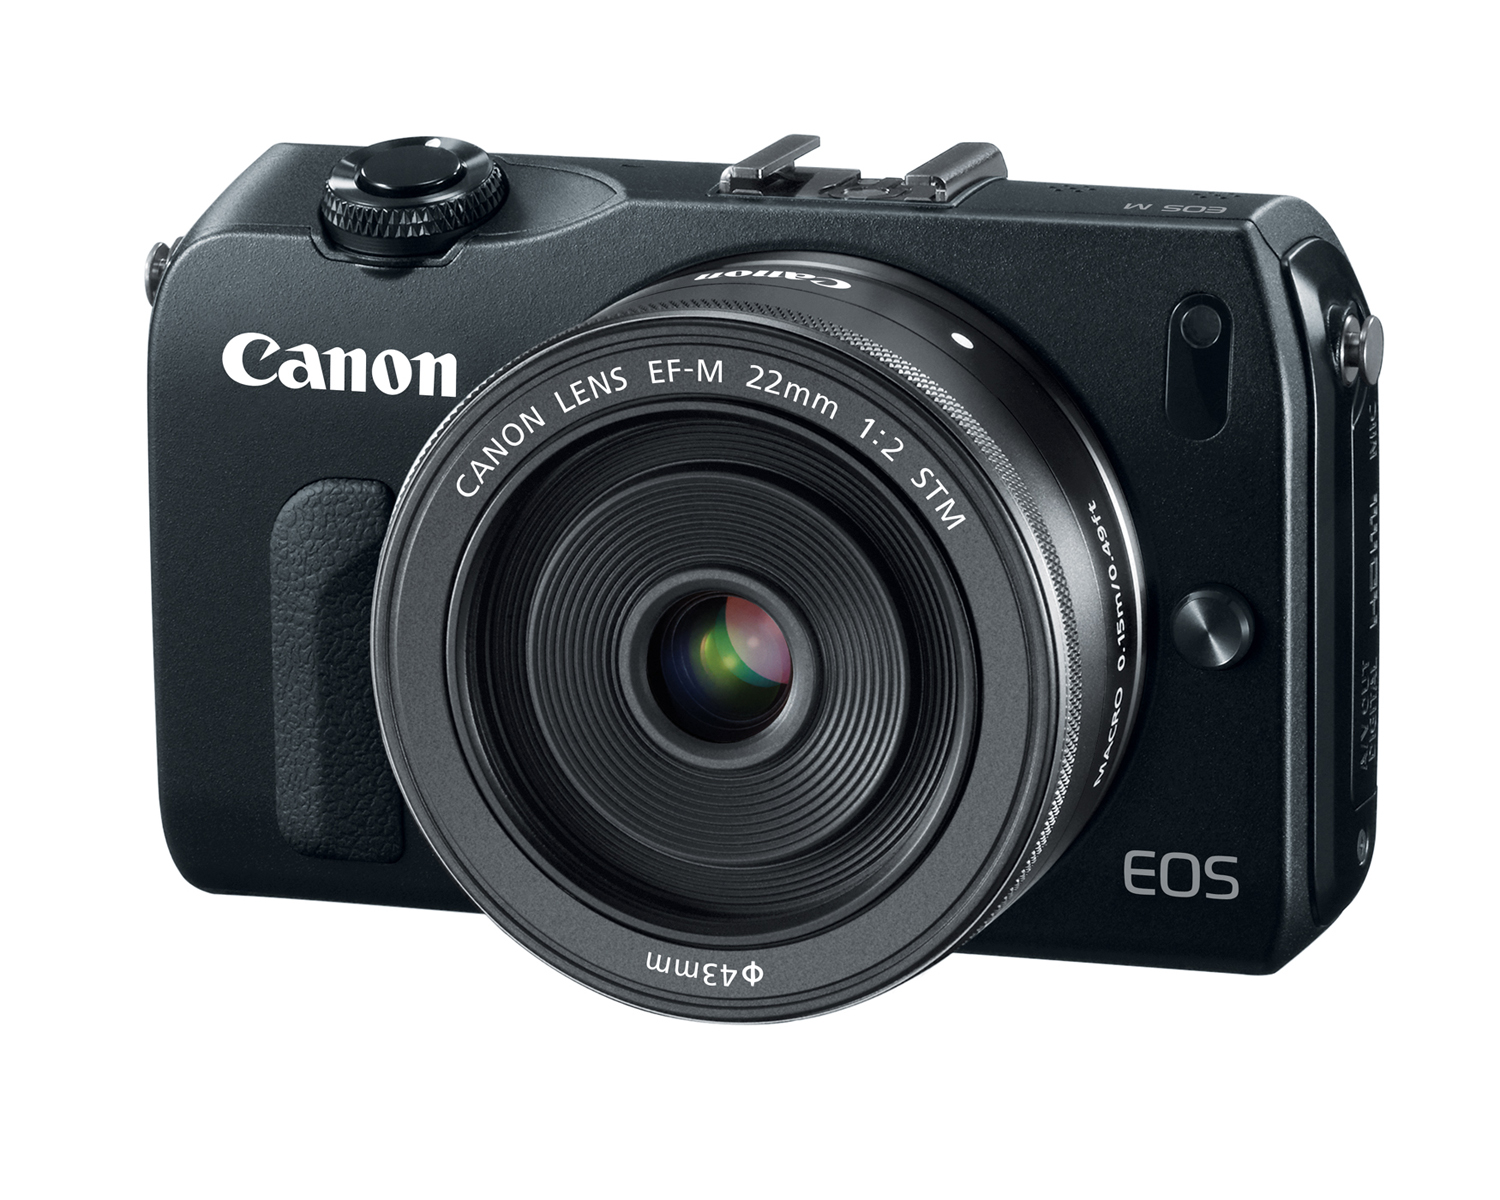  Canon  unveils EOS M 18MP mirrorless camera  800 in 